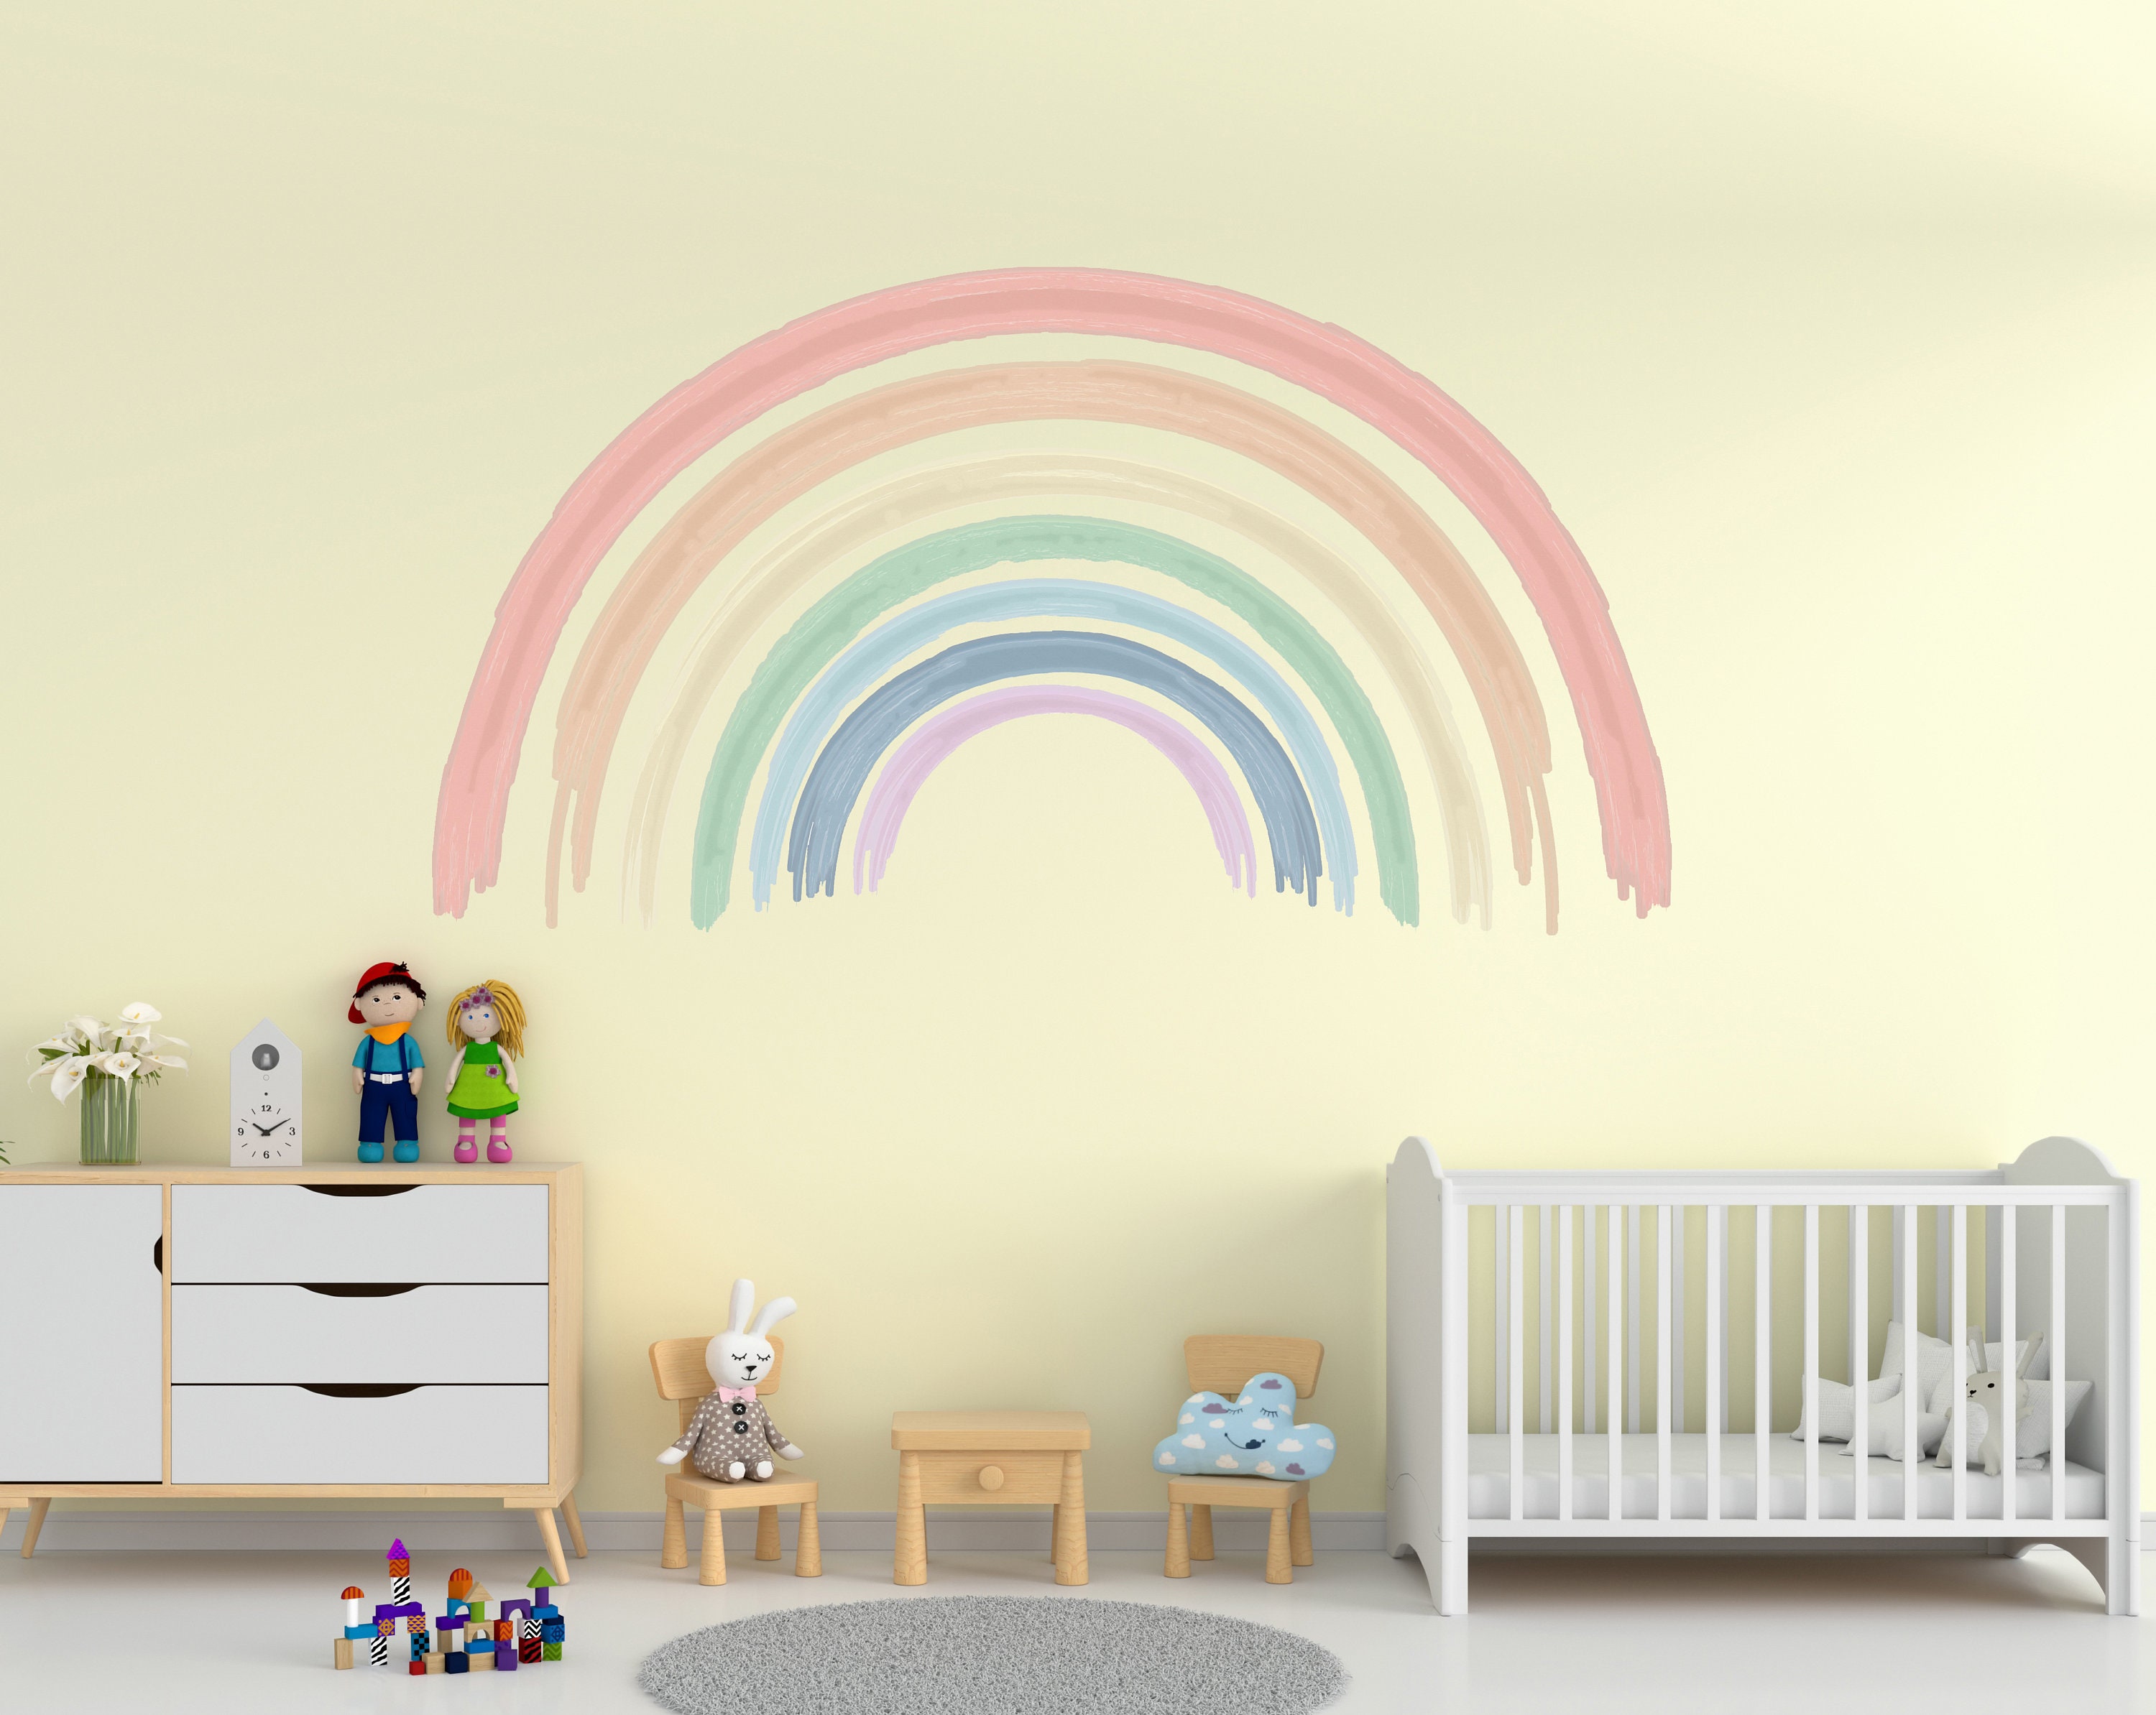 Rainbow Stacker, Rainbow Room Decor, Rainbow Nursery Decor, Pastel Rainbow  Decor 